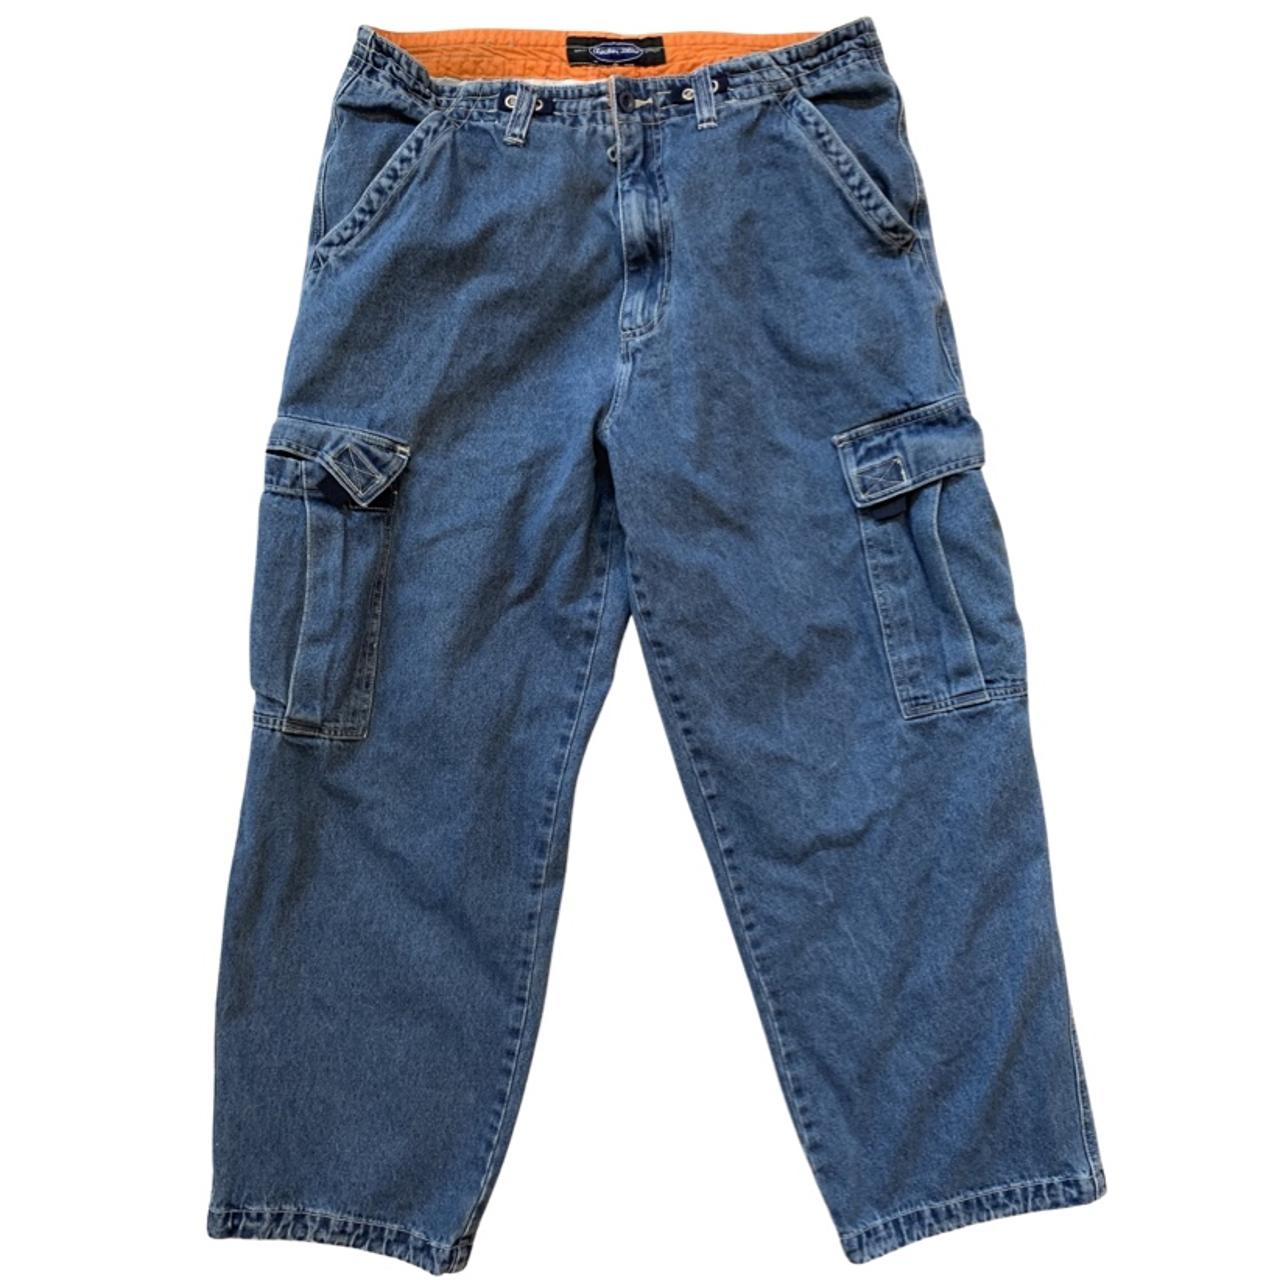 Anchor blue cargo blue baggy jeans 34x32 - Depop